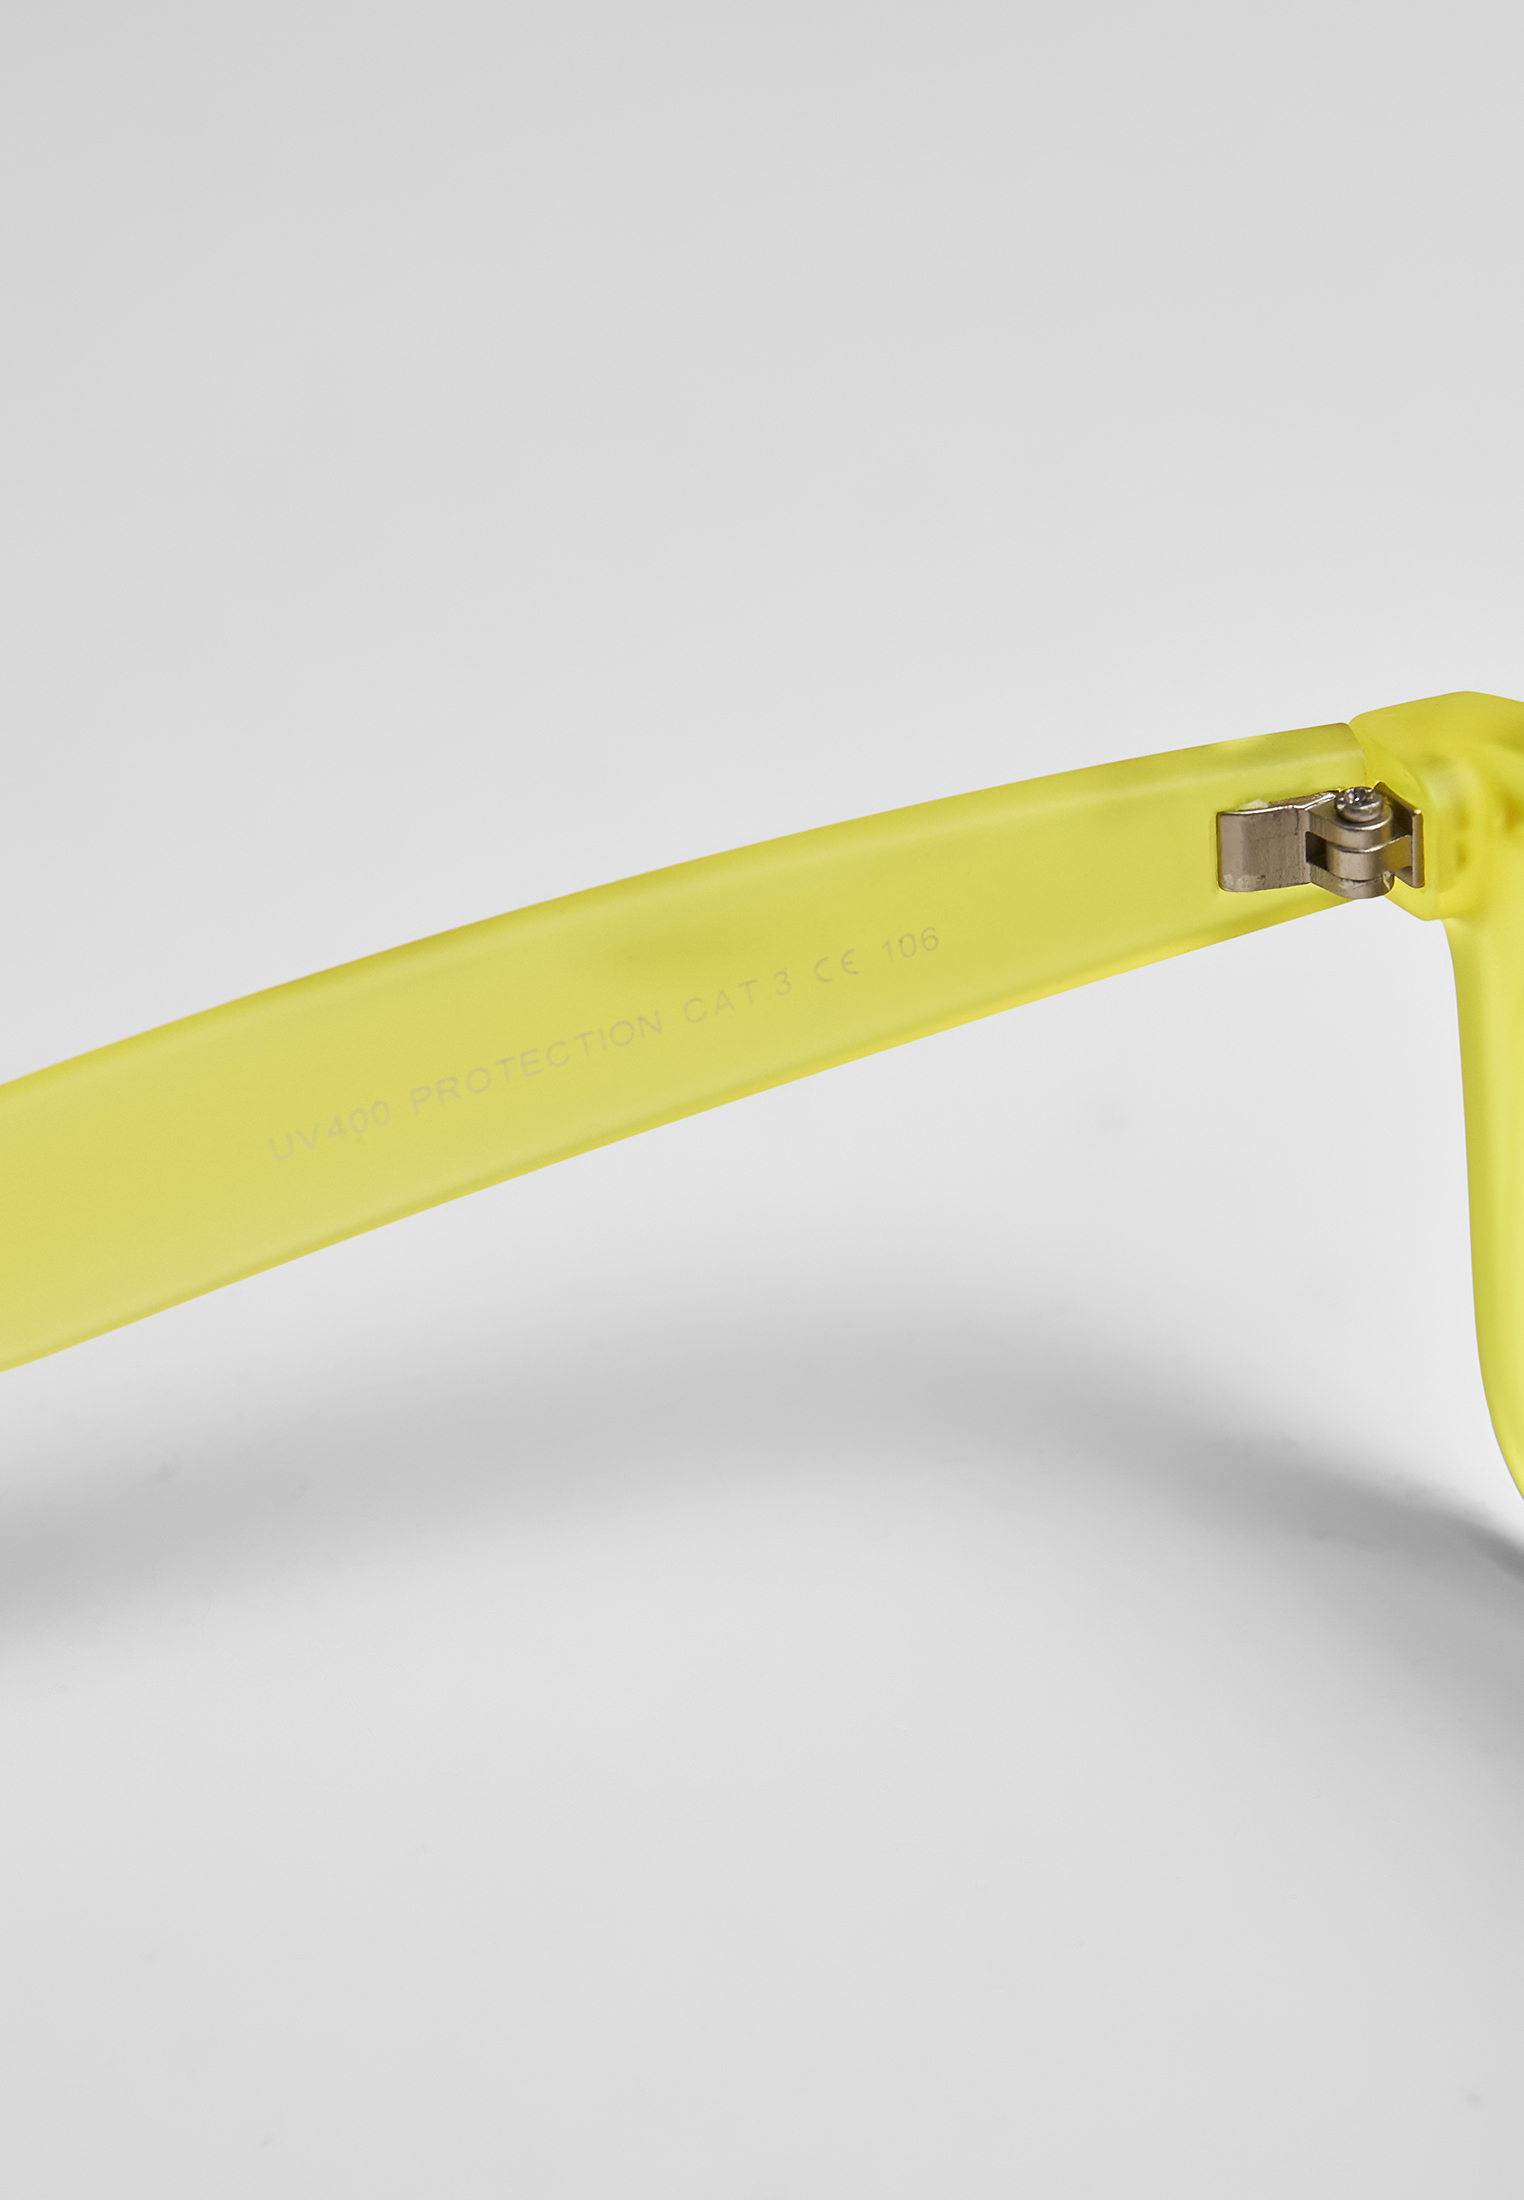 Sonnenbrillen Sunglasses Likoma UC in Farbe neonyellow